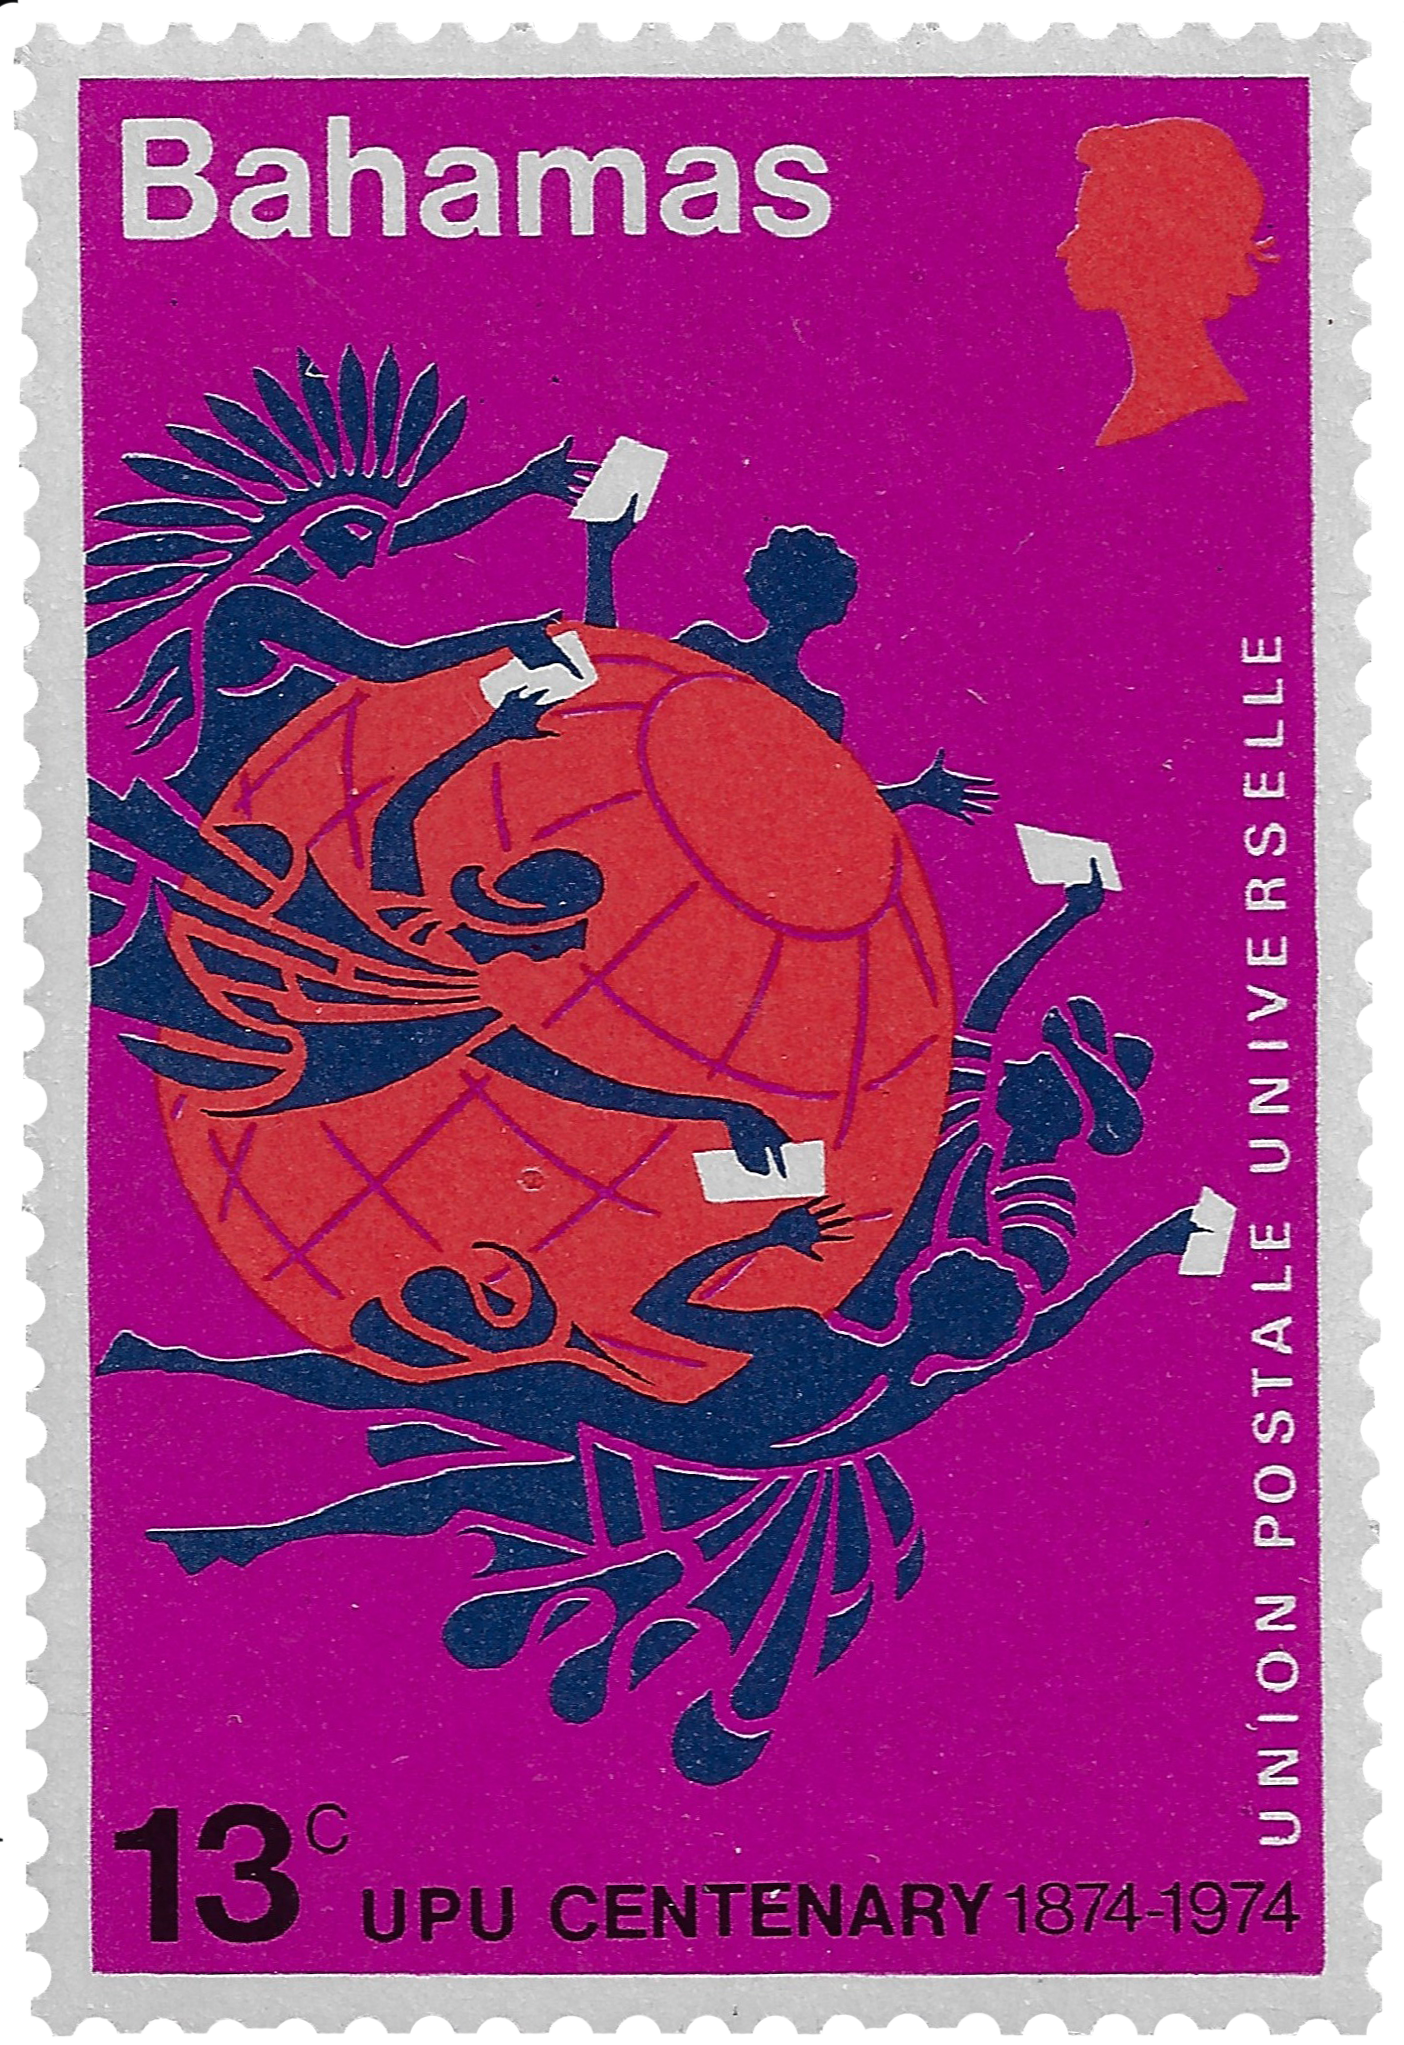 13c 1974, UPU Centenary 1874-1974, Union Postale Universelle